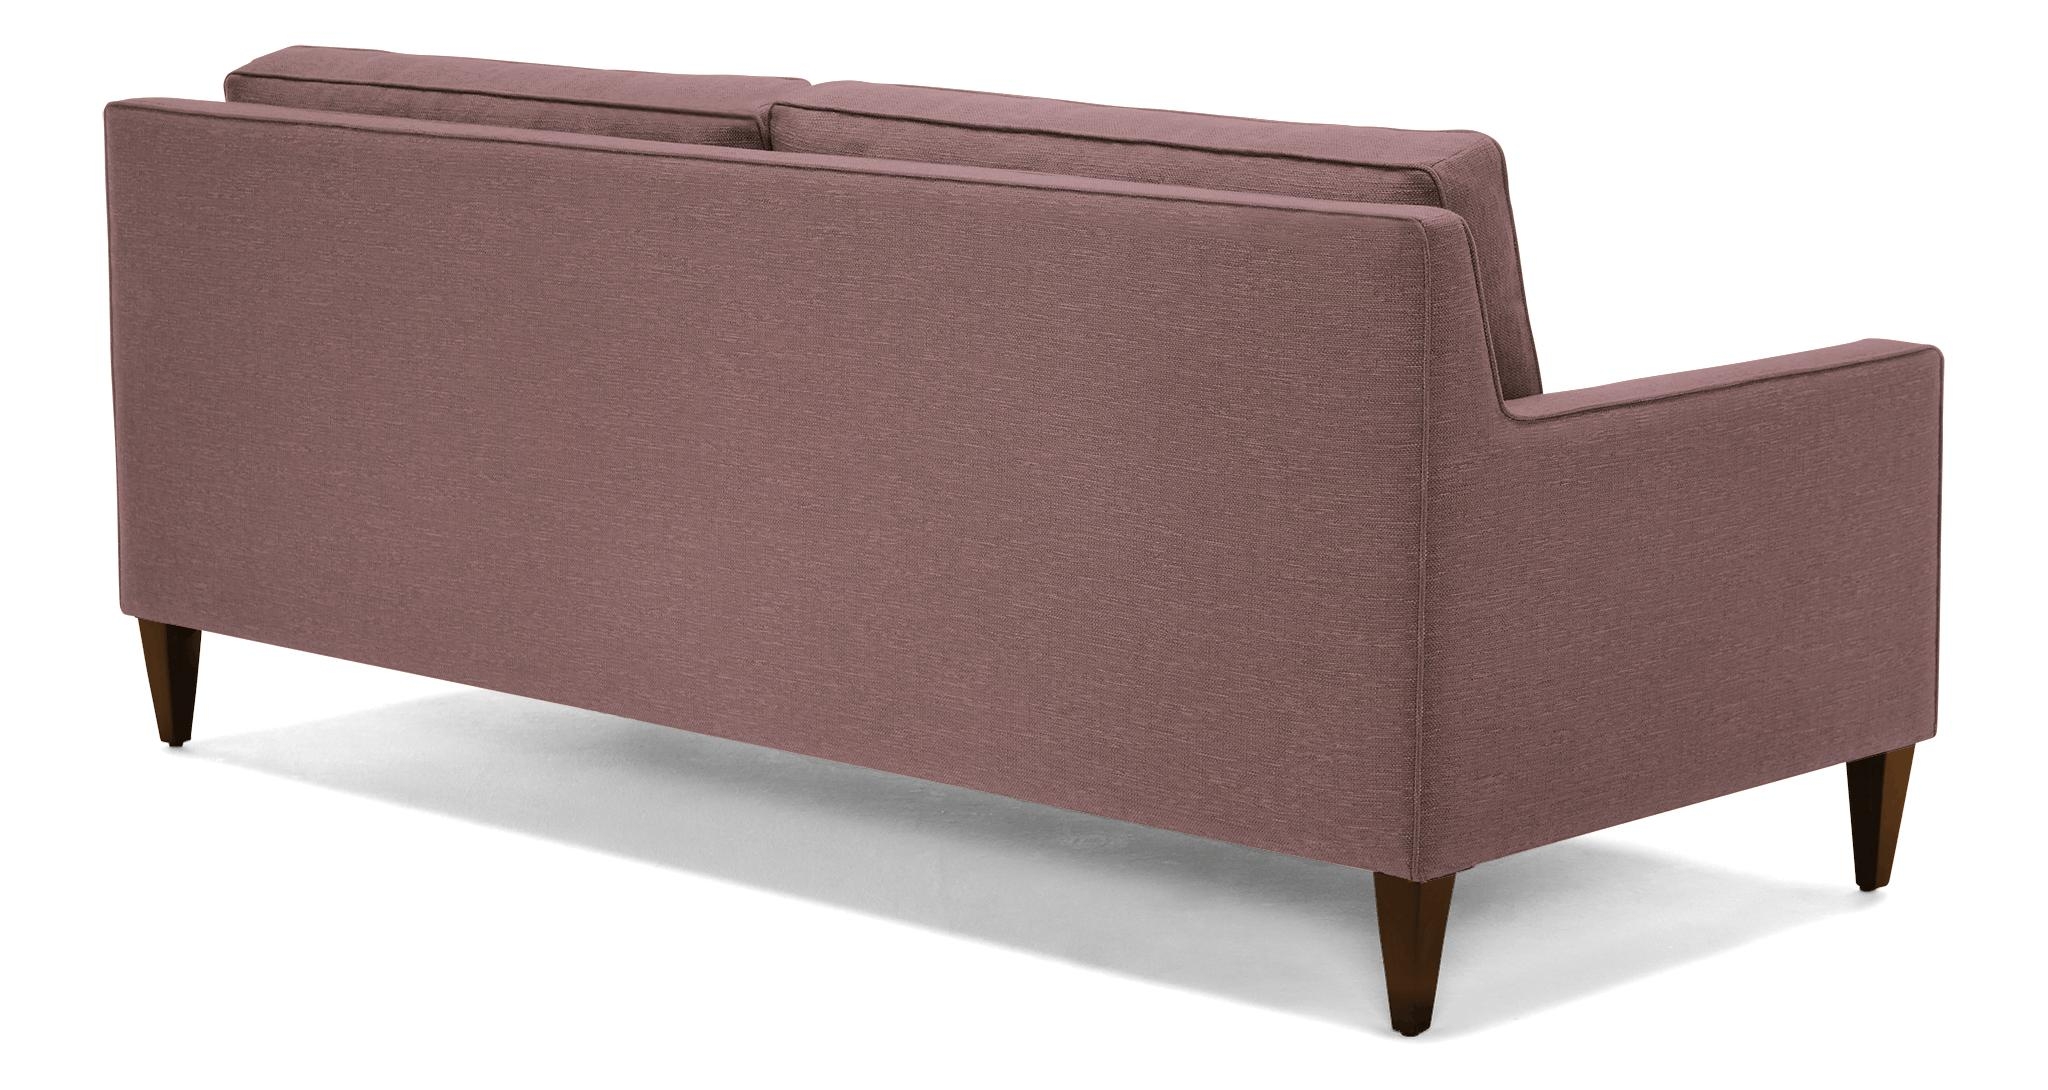 Purple Levi Mid Century Modern Sofa - Marin Mauve - Mocha - Image 3